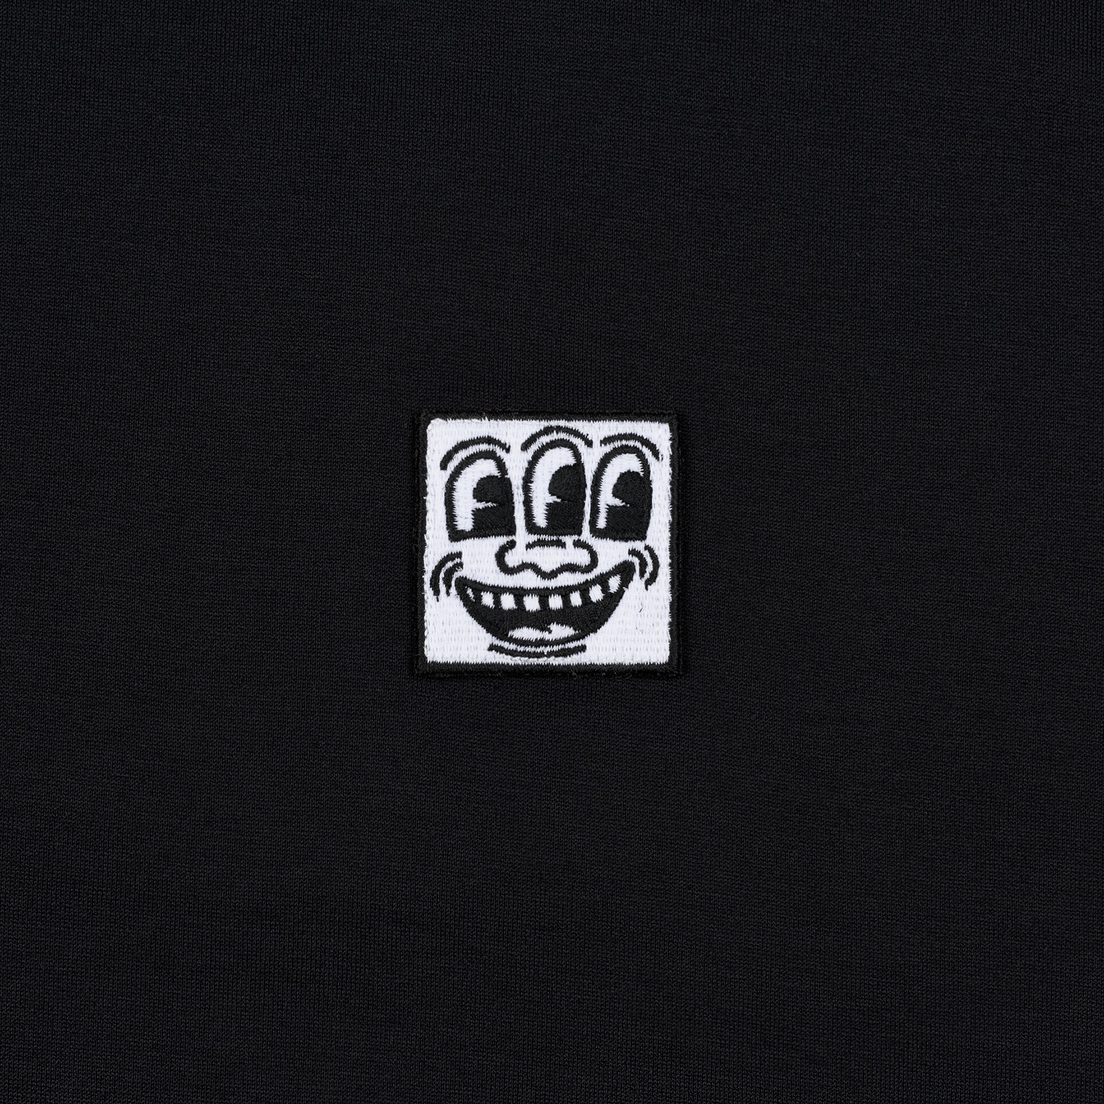 Etudes Мужская футболка x Keith Haring Unity Patch